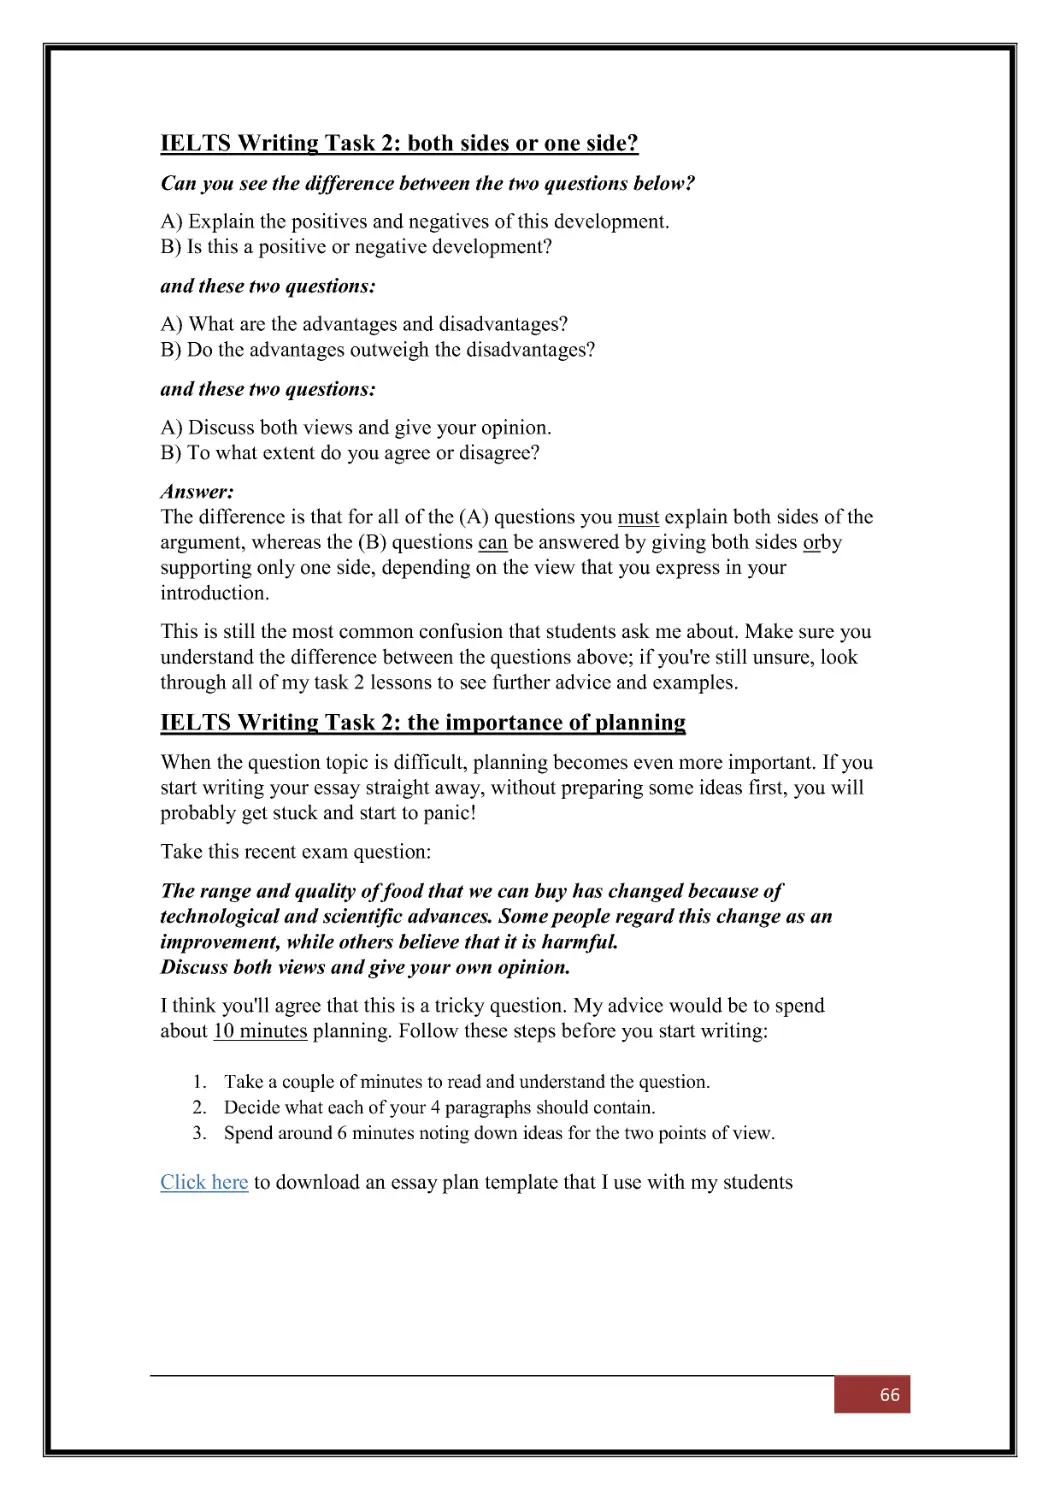 UIELTS Writing Task 2: both sides or one side?U
UIELTS Writing Task 2: the importance of planningU